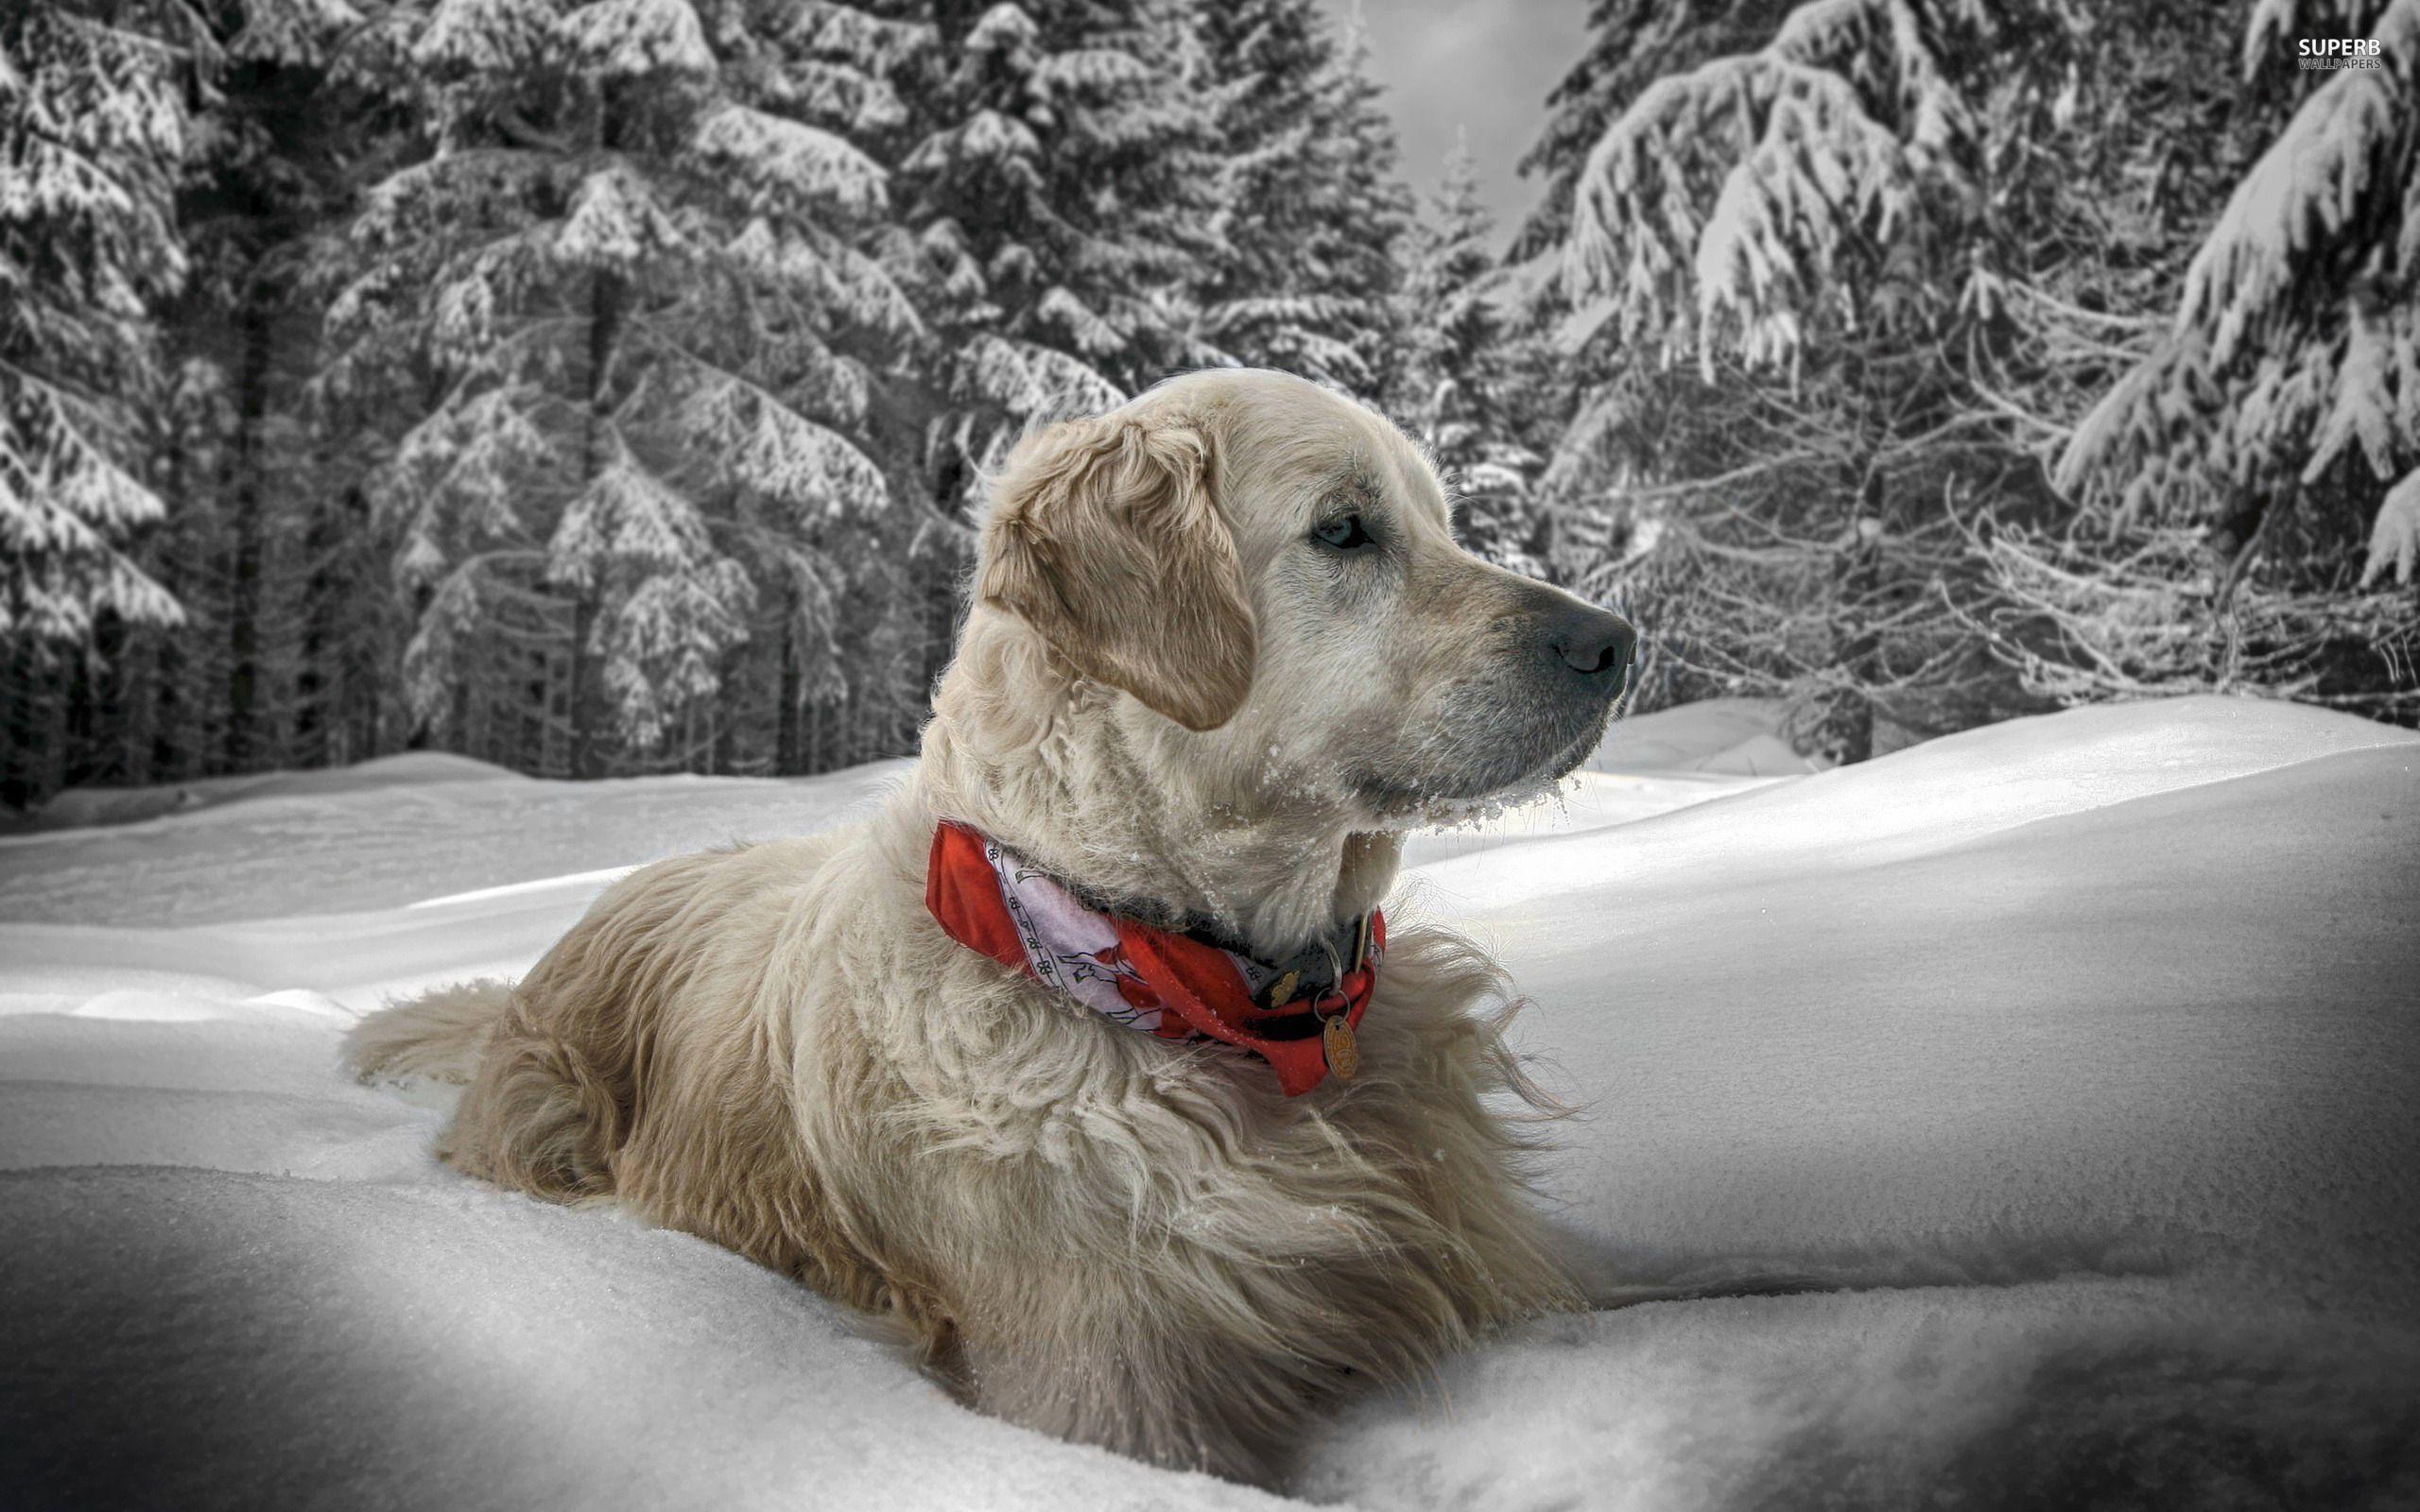 Winter Animal Wallpaper Picture. Dogs golden retriever